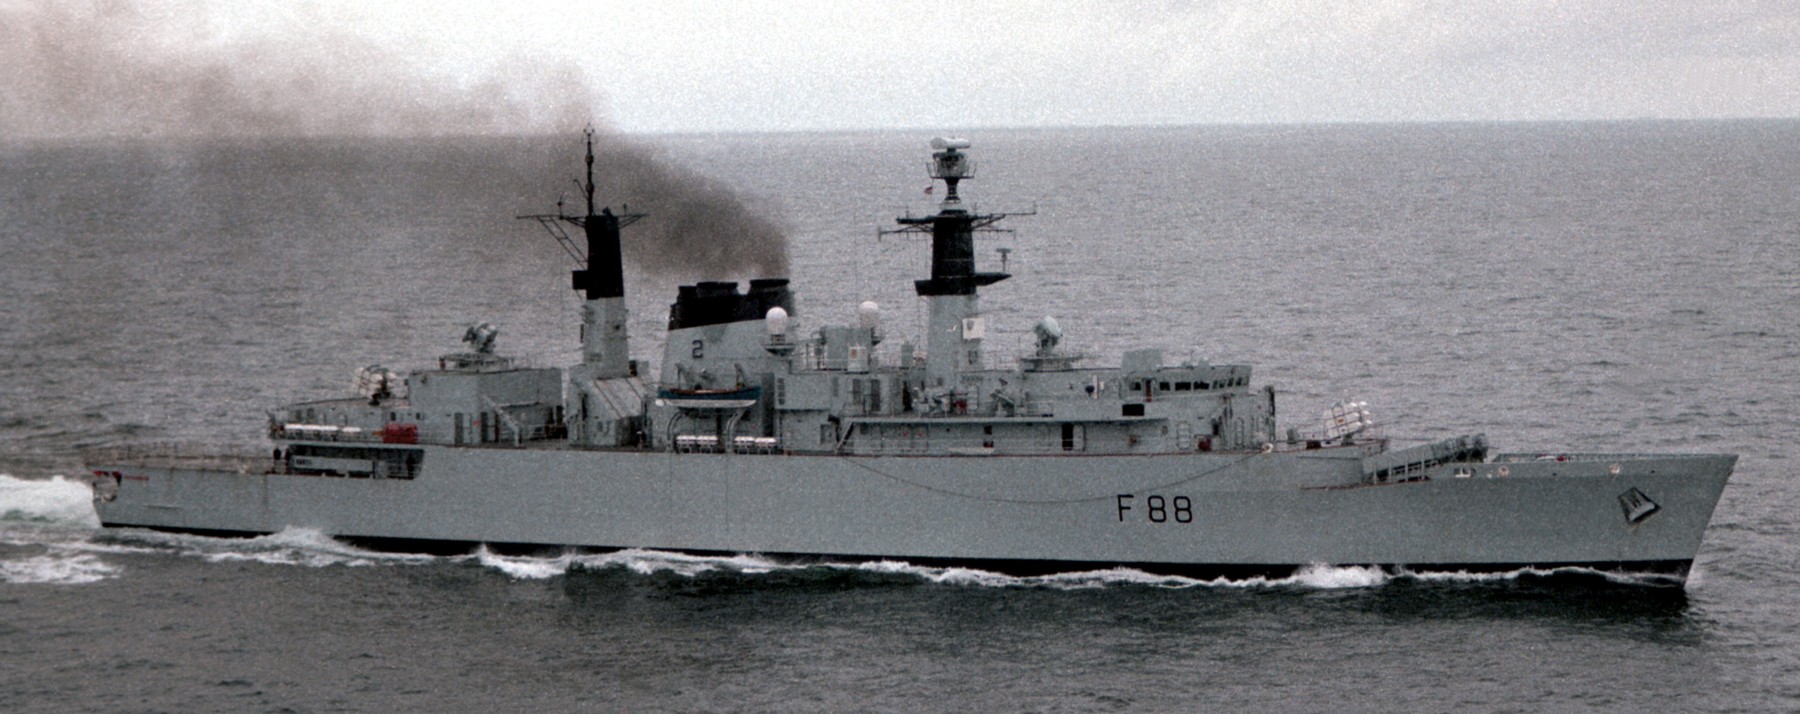 f88 hms broadsword type 22 class frigate royal navy